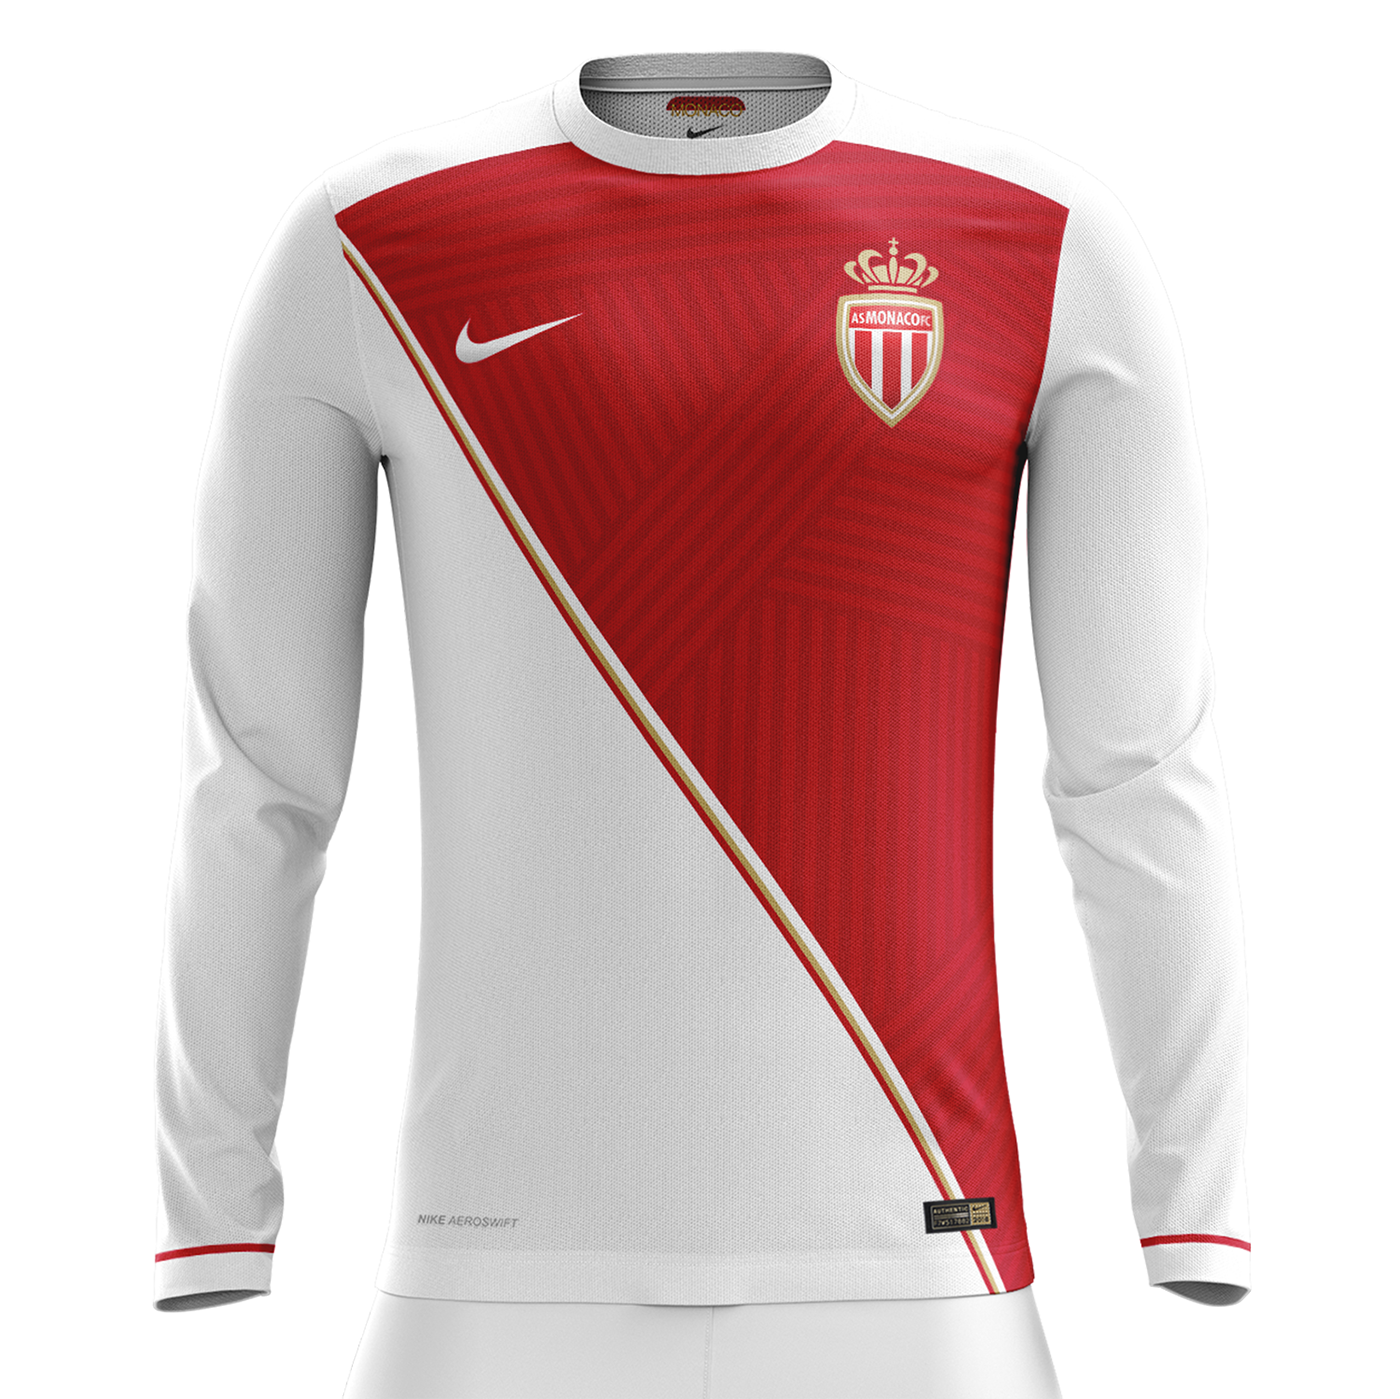 AS Monaco Monaco france maglia maillot jersey Nike kit design